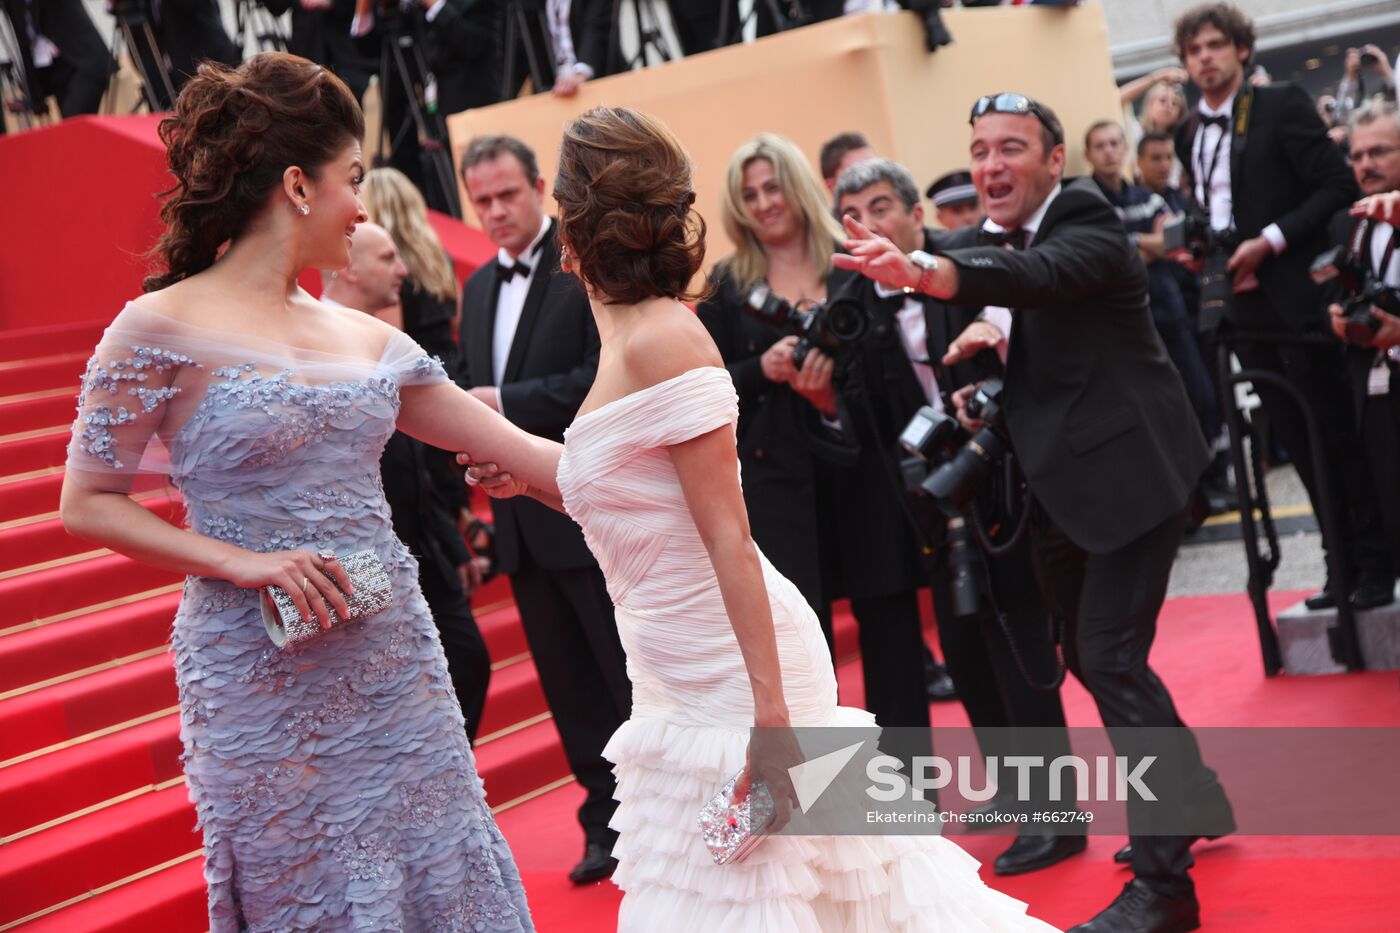 63rd Cannes Film Festival kicks off in France